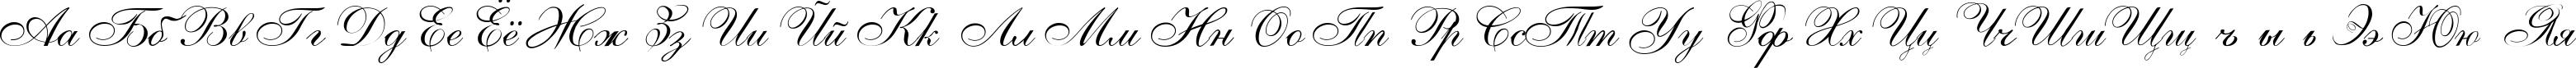 Пример написания русского алфавита шрифтом Allegretto Script One